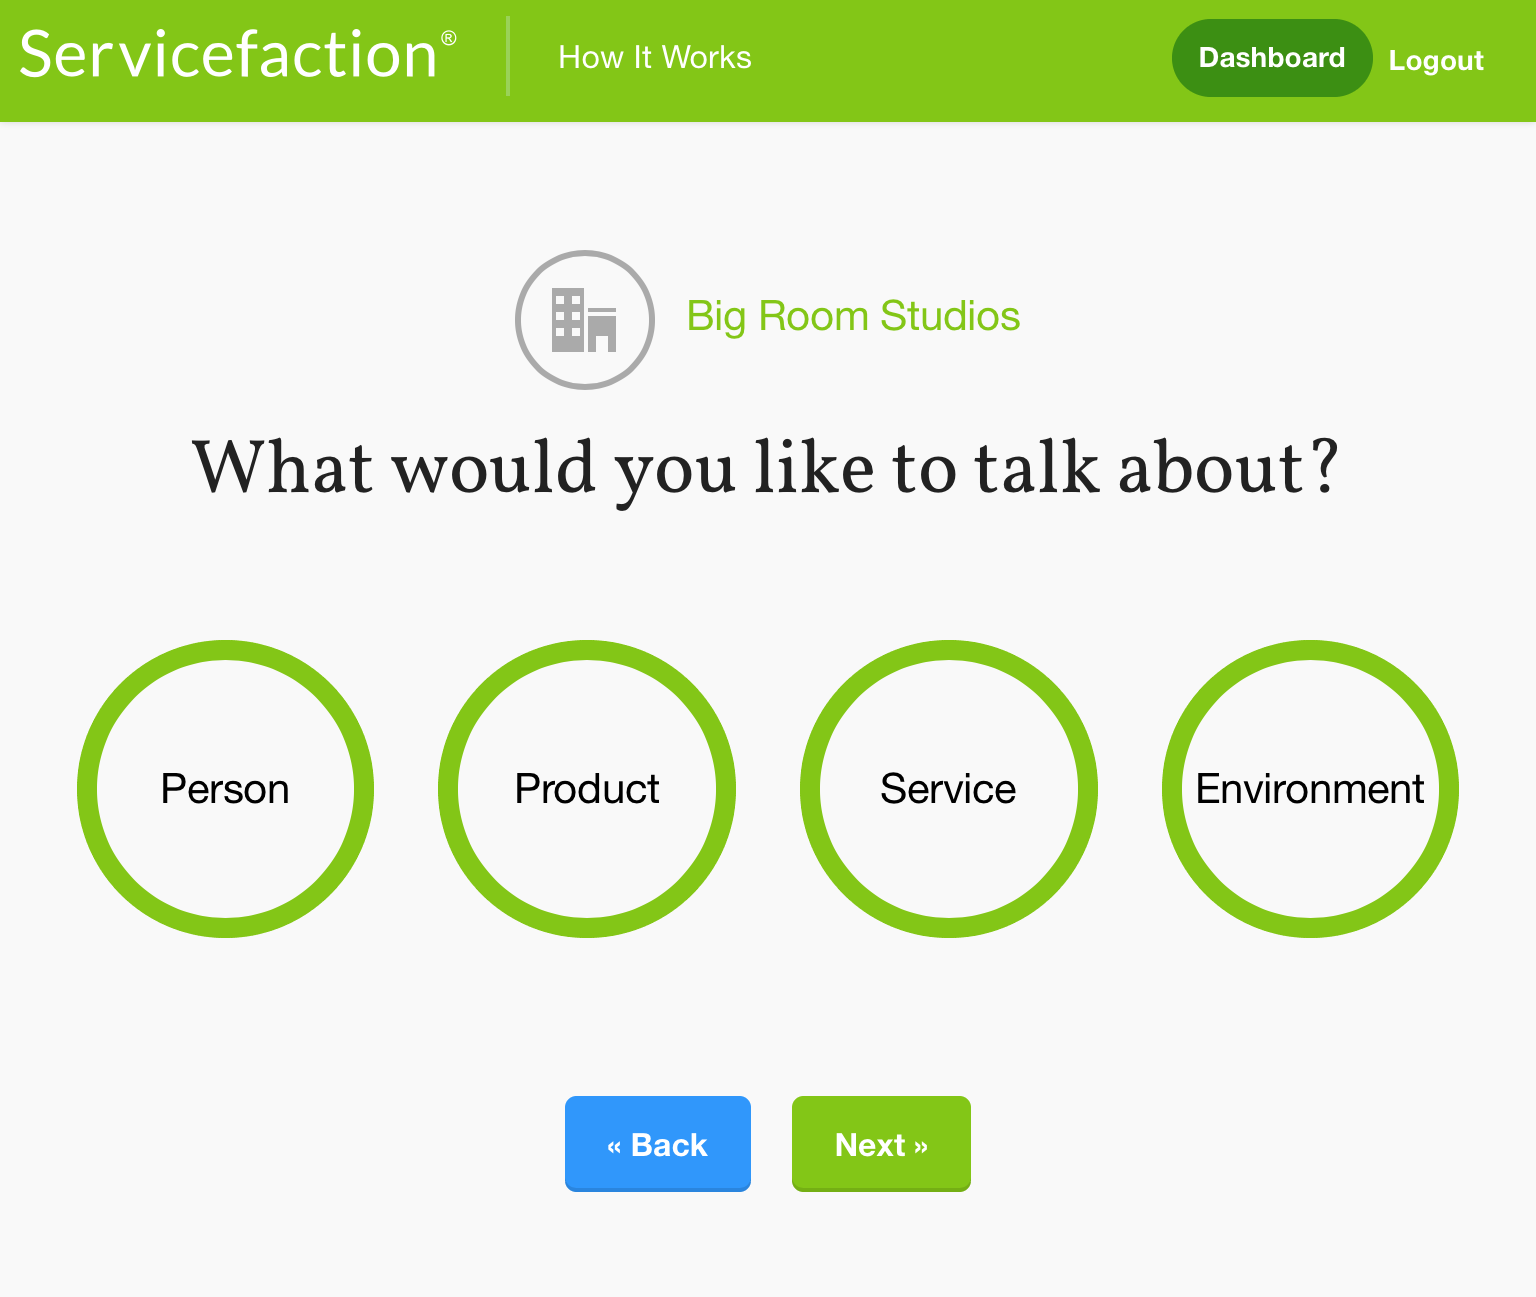 Servicefaction questionnaire screenshot